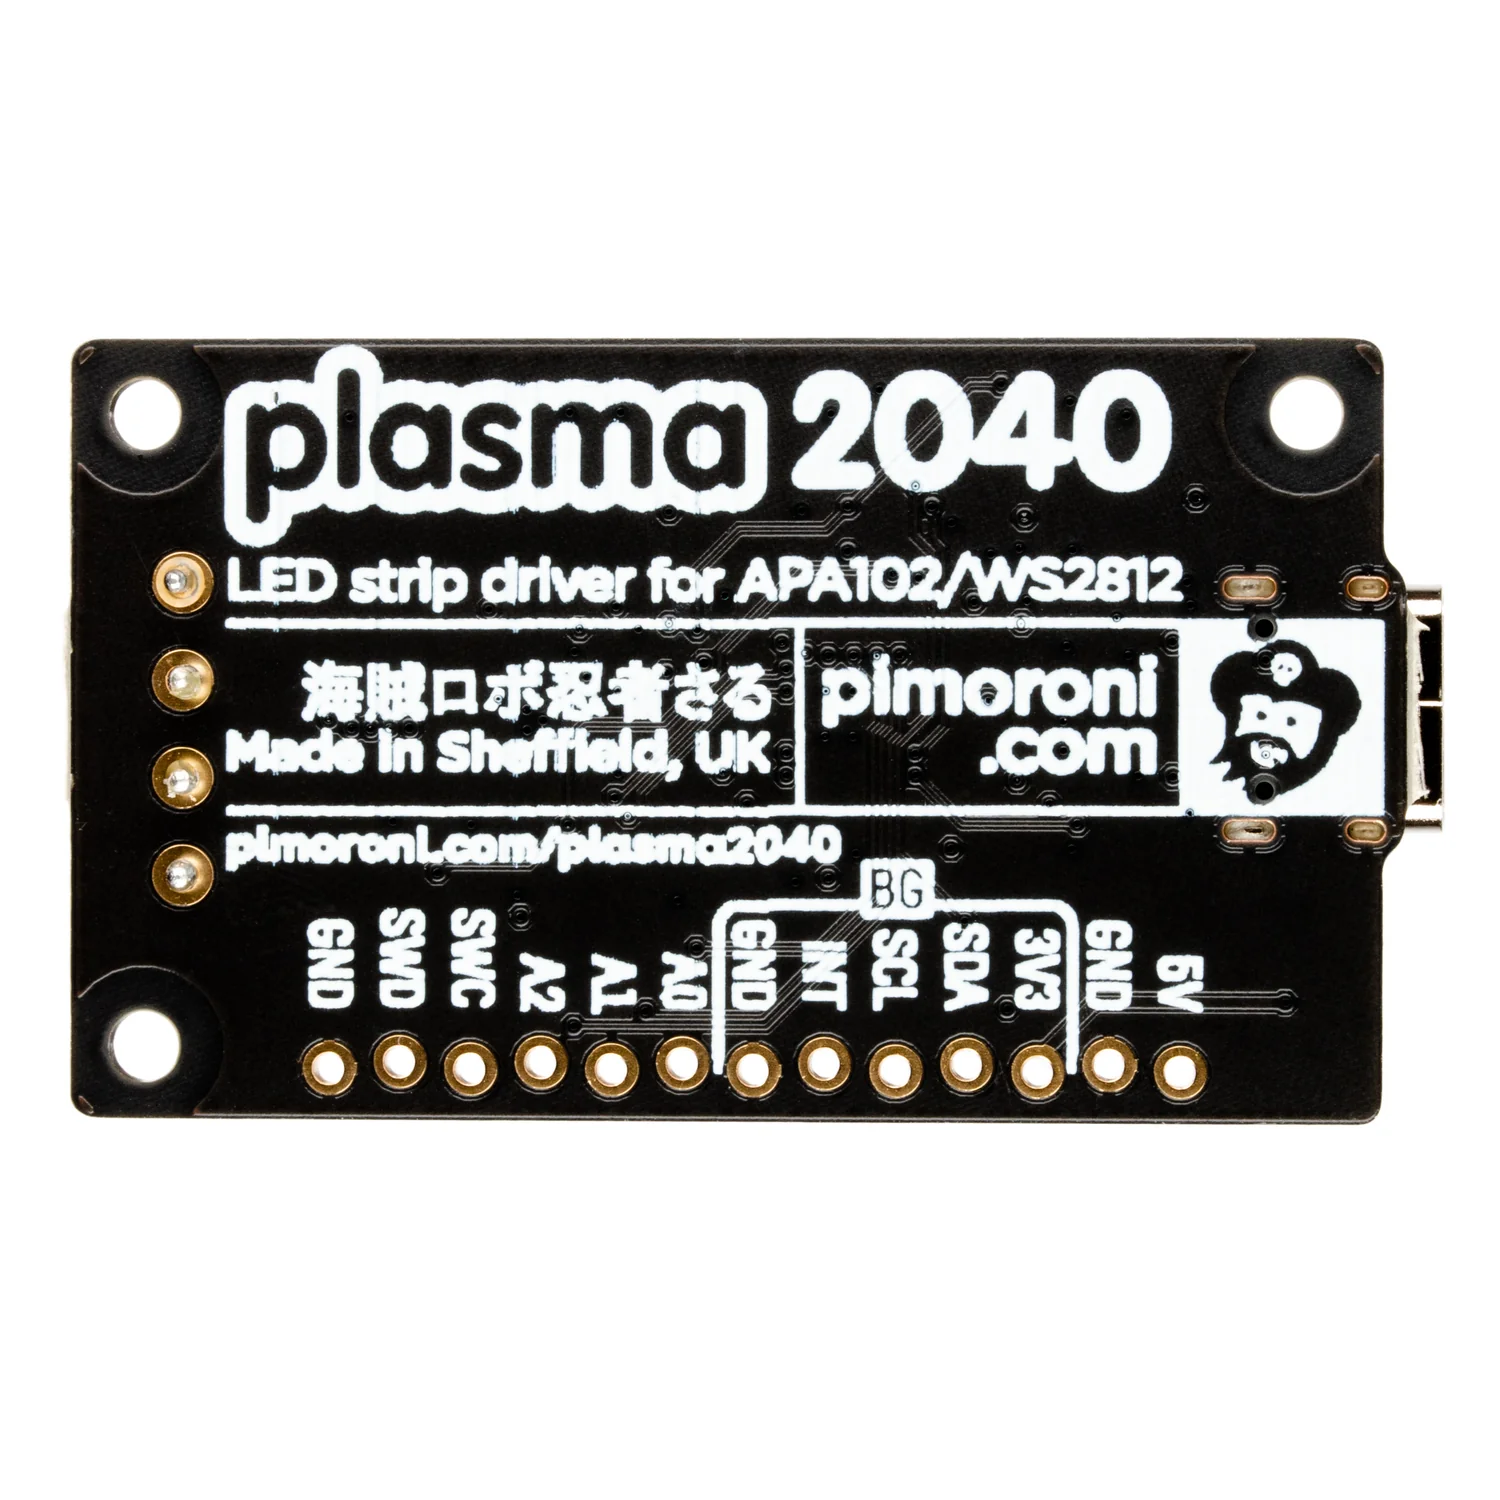 Plasma2040_4of4_1500x1500.jpg